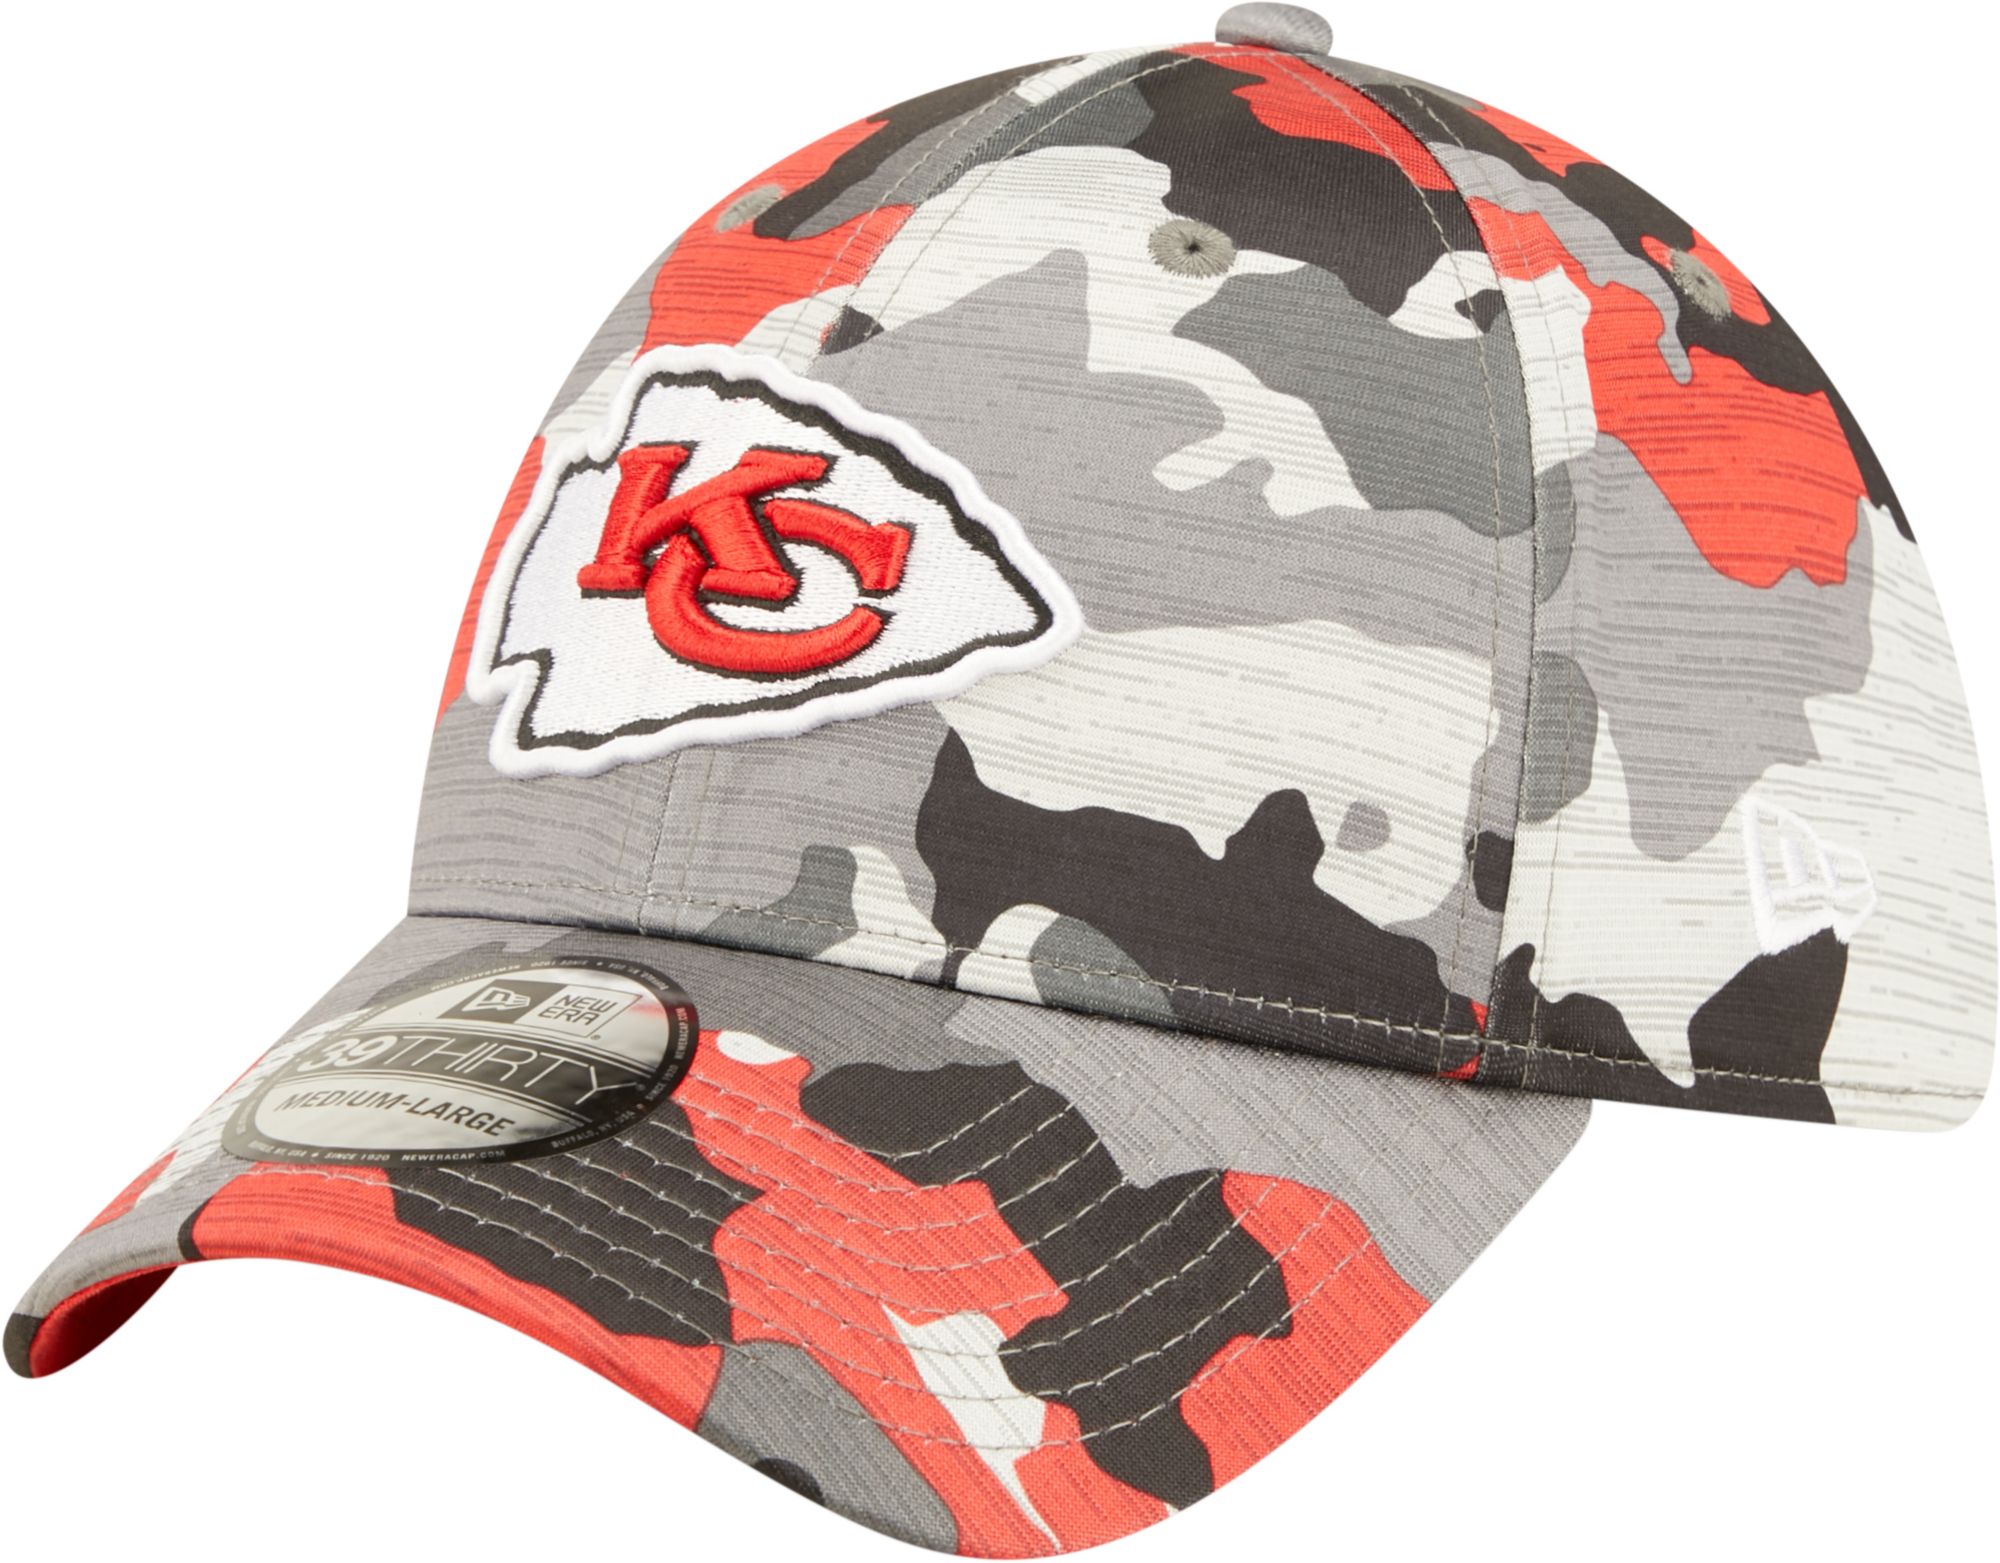 Kansas City Chiefs of NFL New Era Hats